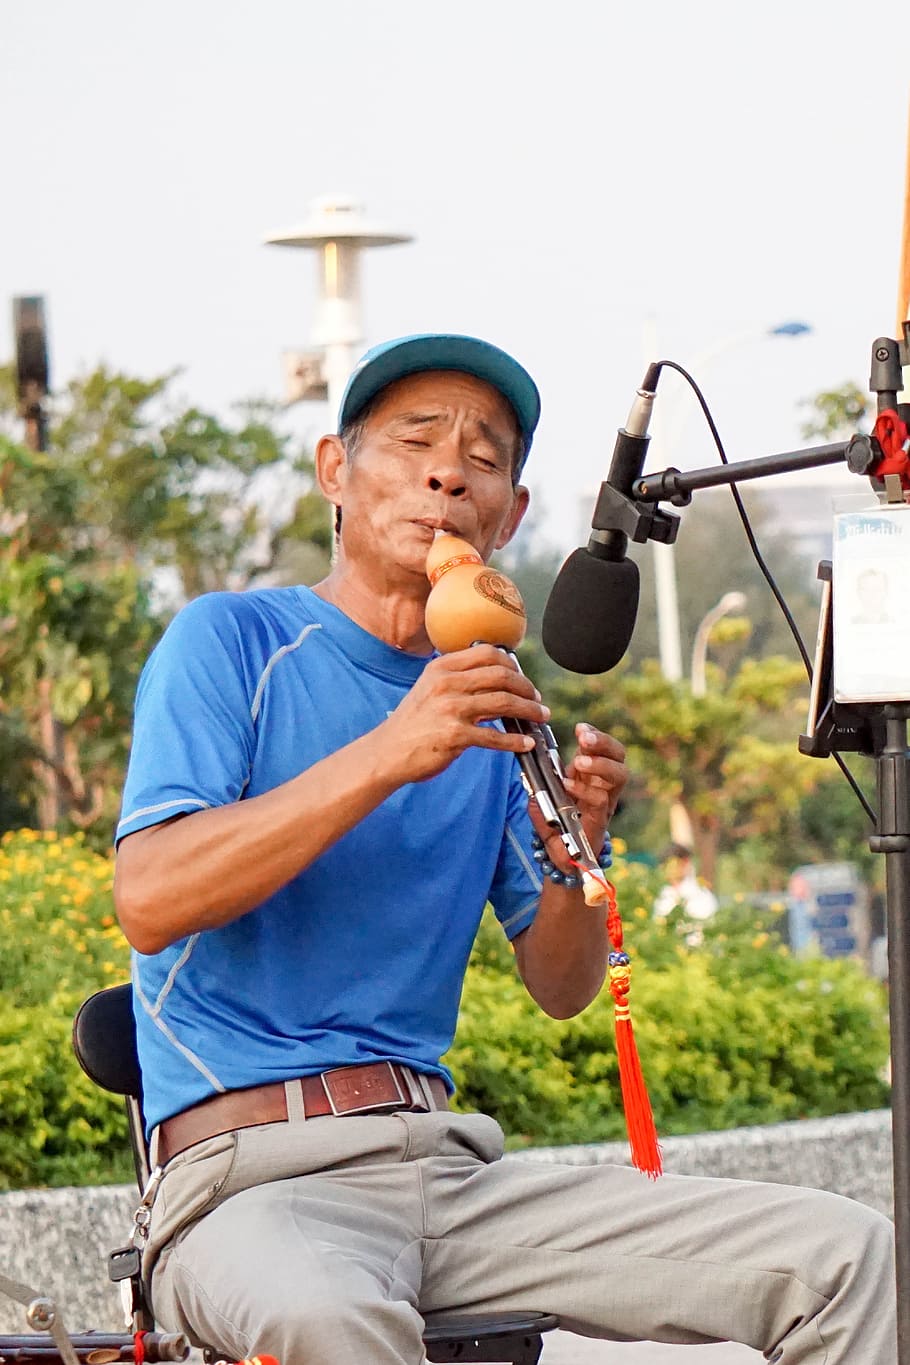 cucurbit flute, flute, musician, show, music show, play, grandpa, senior, performer, asian